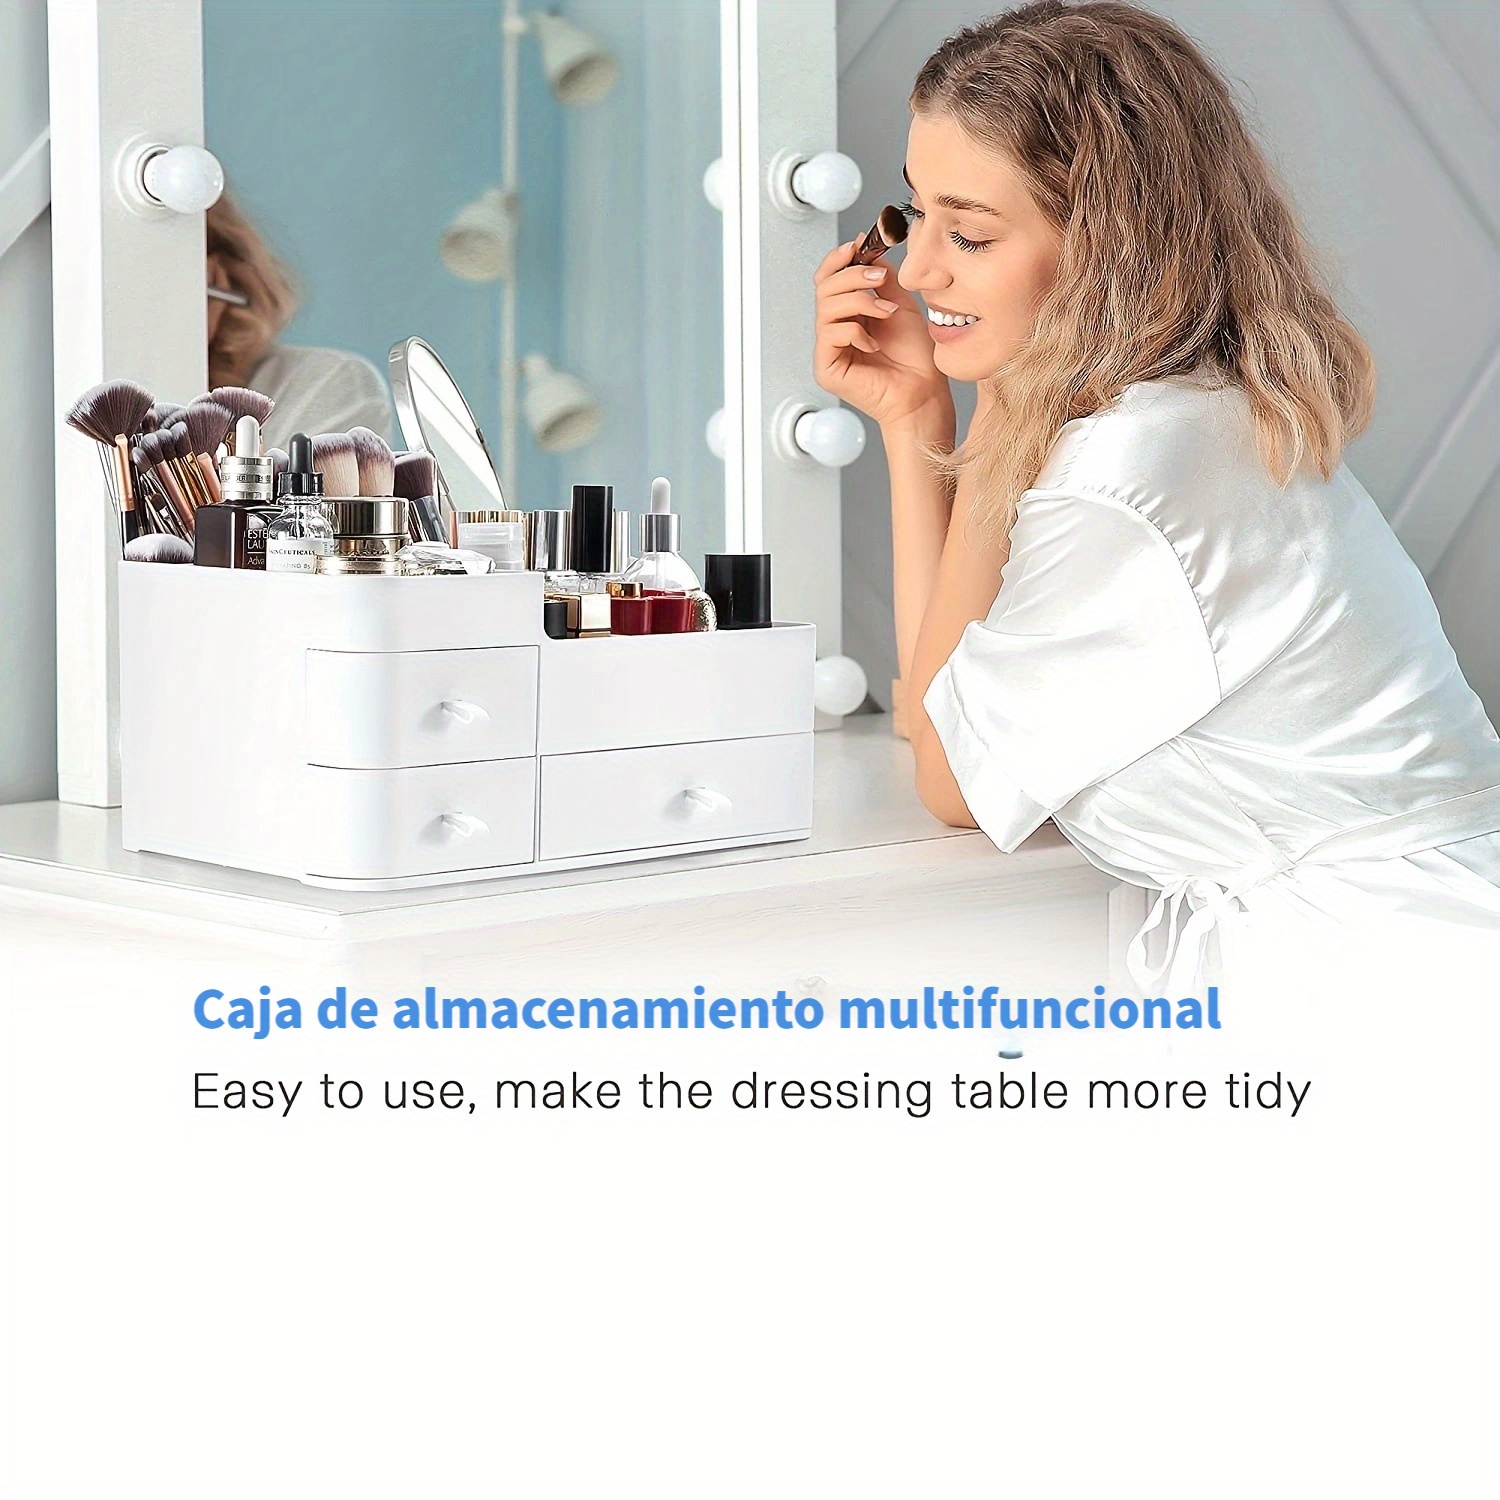 Organizador de baño aseo para maquillaje pintalabios con espejo. Caja –